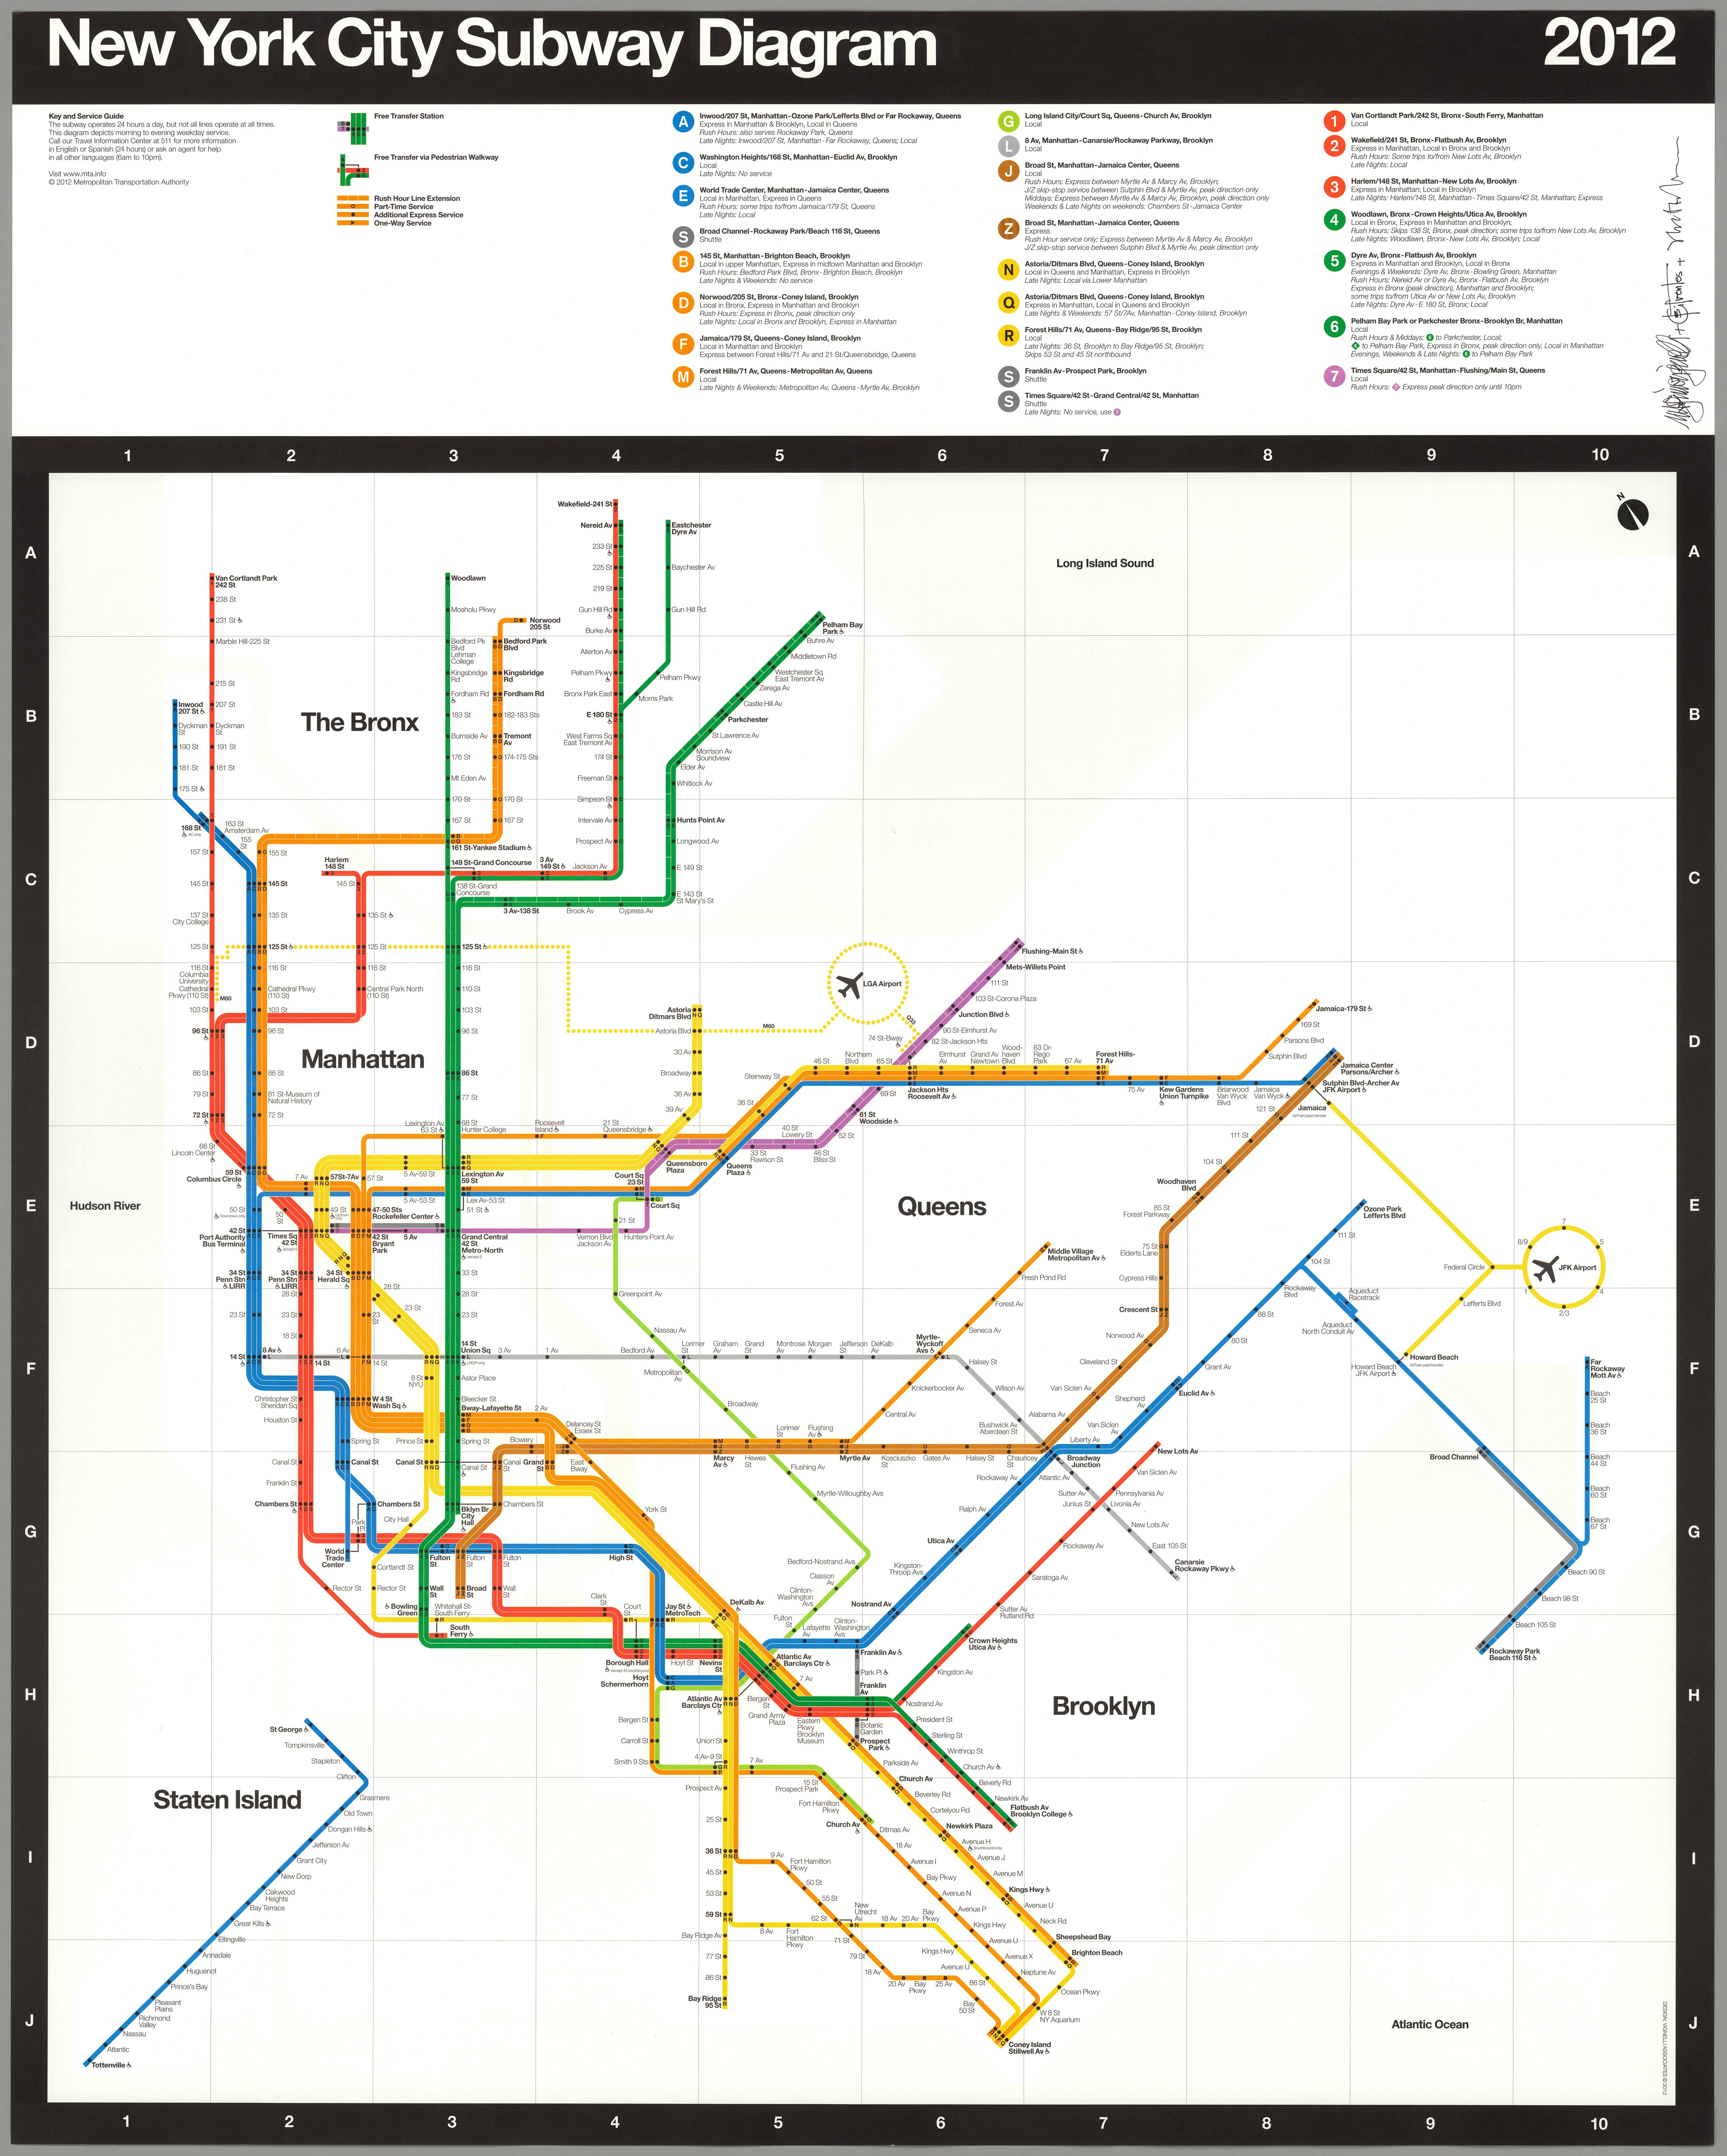 New York City Subway Diagram, 2012. Designed by Massimo Vignelli